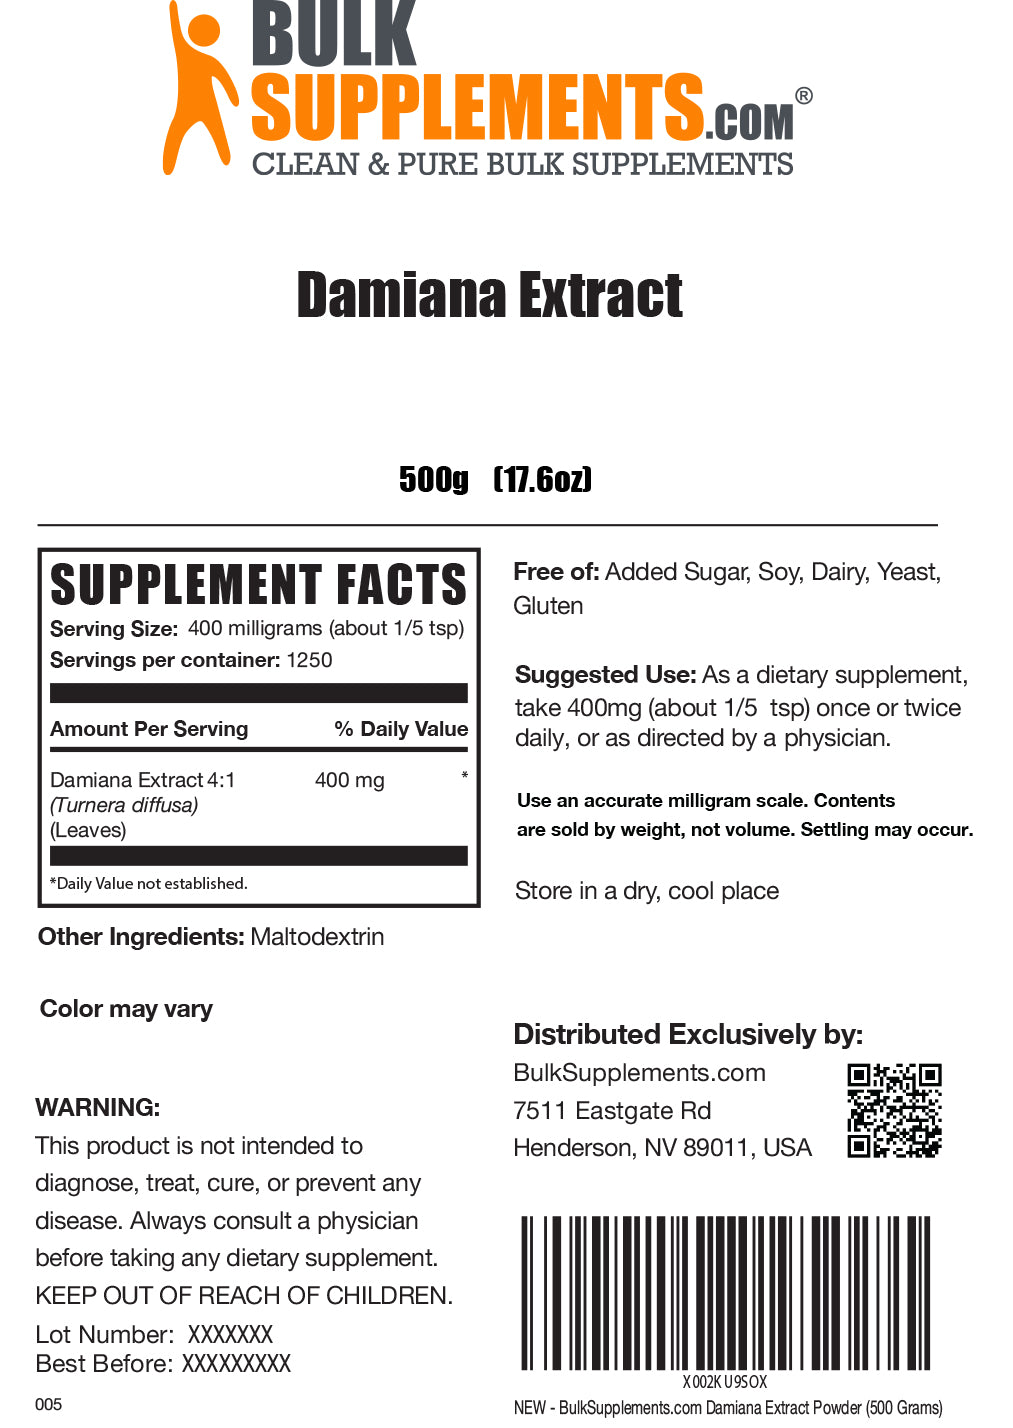 Damiana extract powder label 500g